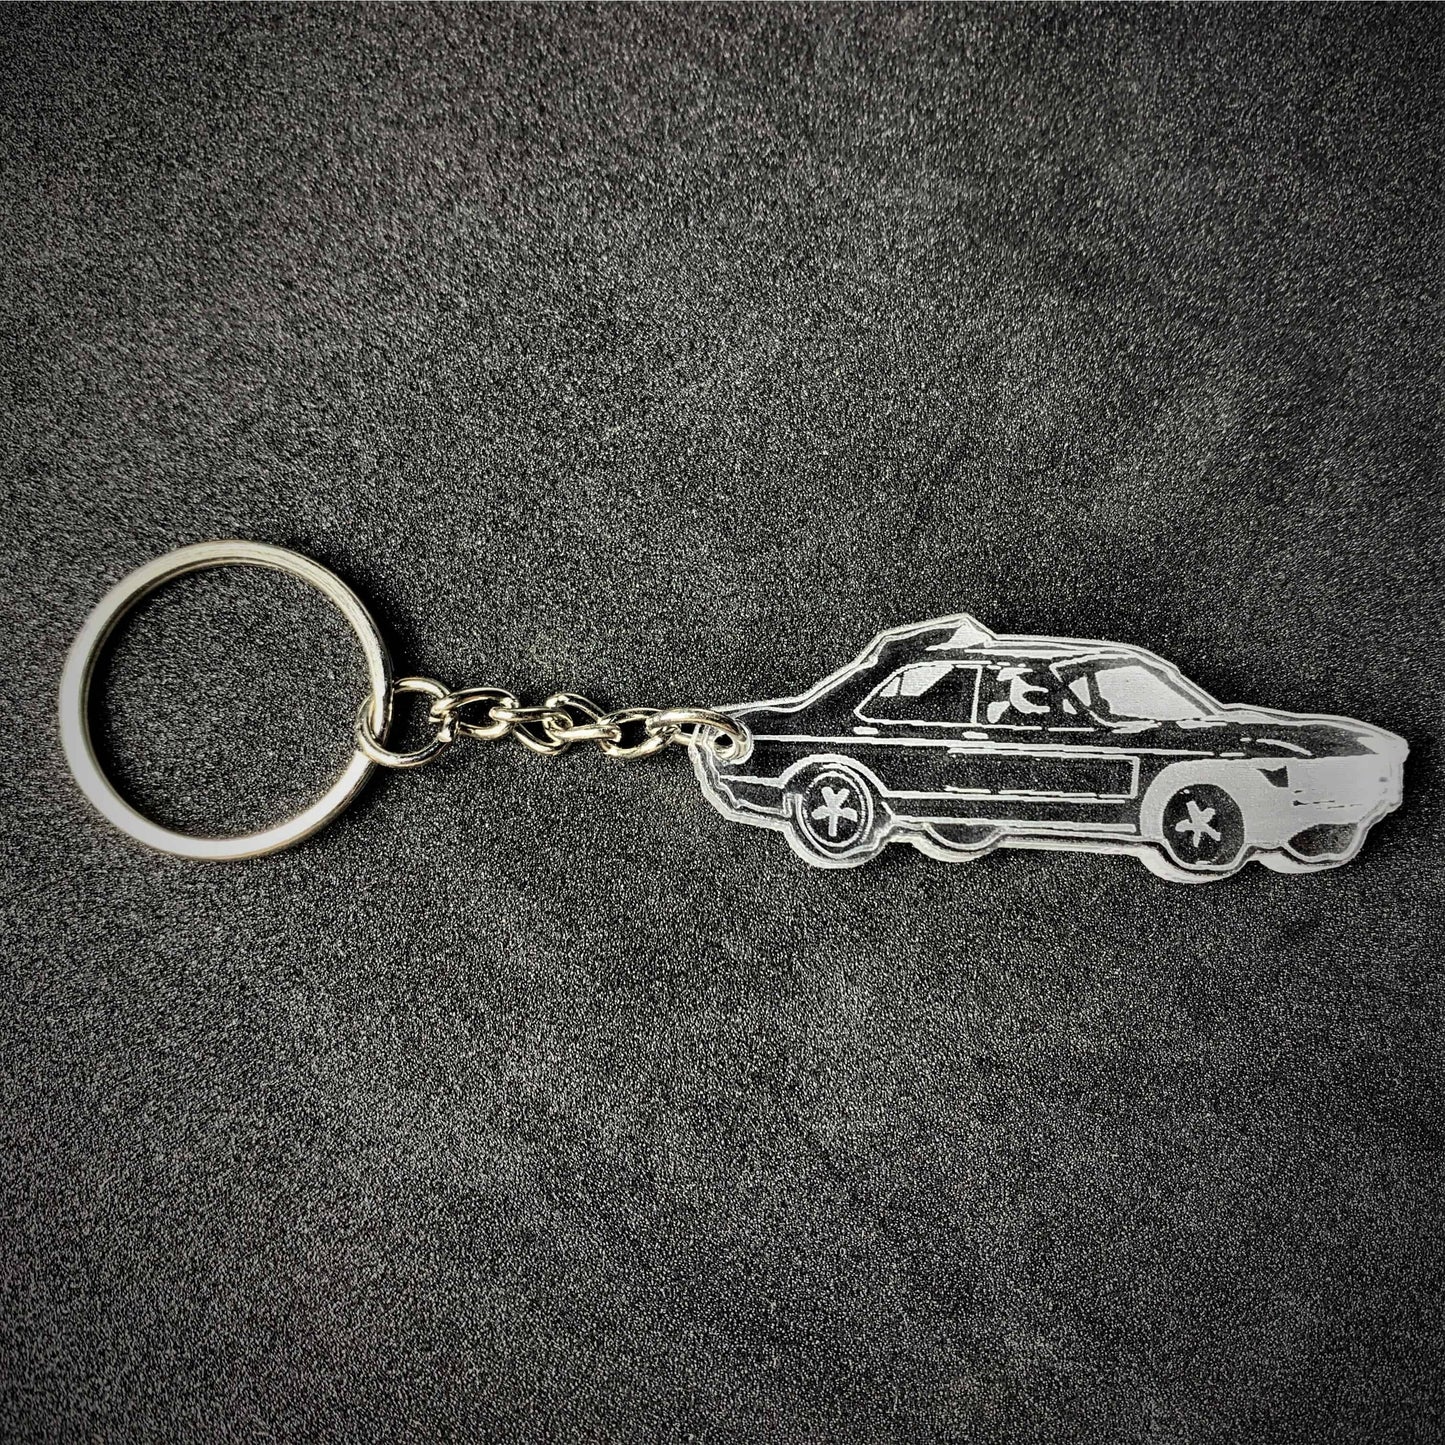 Granada Mk1 Banger Key Ring - Key Ring - Stock Car & Banger Toy Tracks